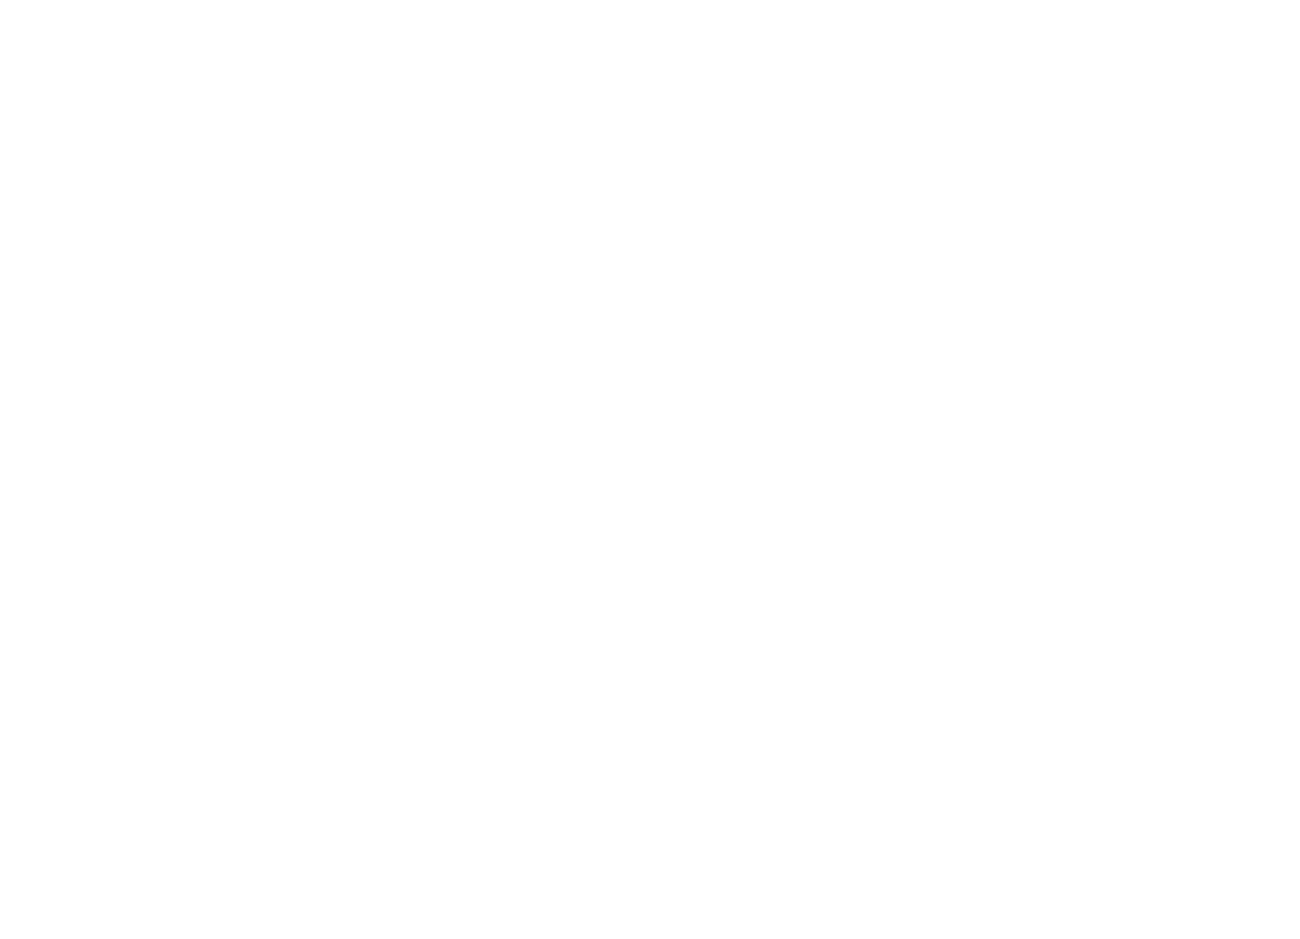 ACS Cormeilles Tennis